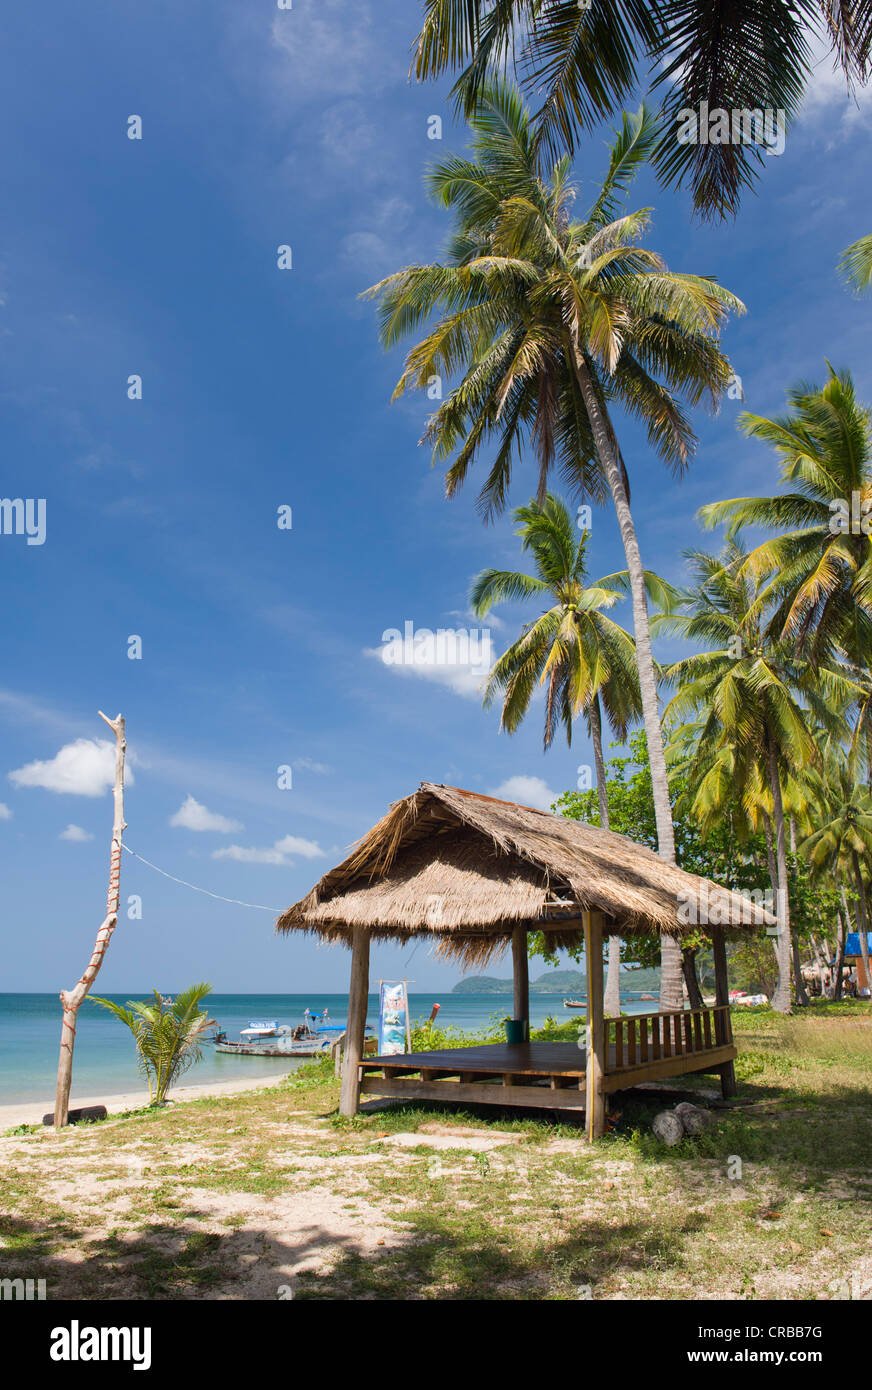 Cabaña en la playa, Palm Beach, Golden Pearl Beach, Ko Jum o isla de Koh Pu, en Krabi, Tailandia, el sudeste de Asia Foto de stock